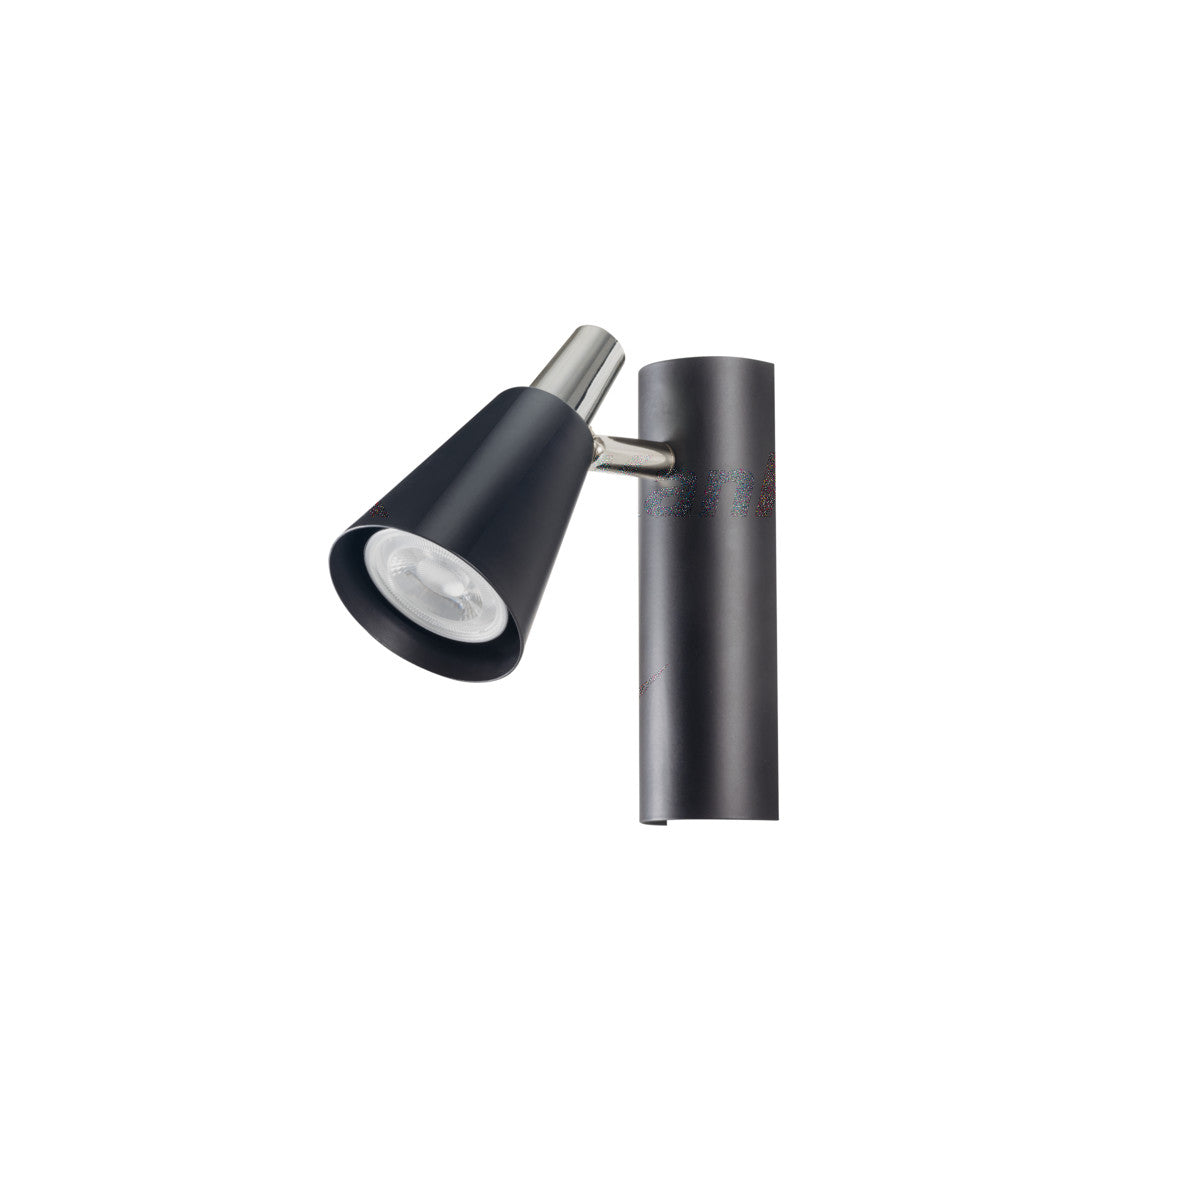 Kanlux SEMPRA Adjustable GU10 Single Double Triple Quad Spotlight Shop Retail Display Light Fitting